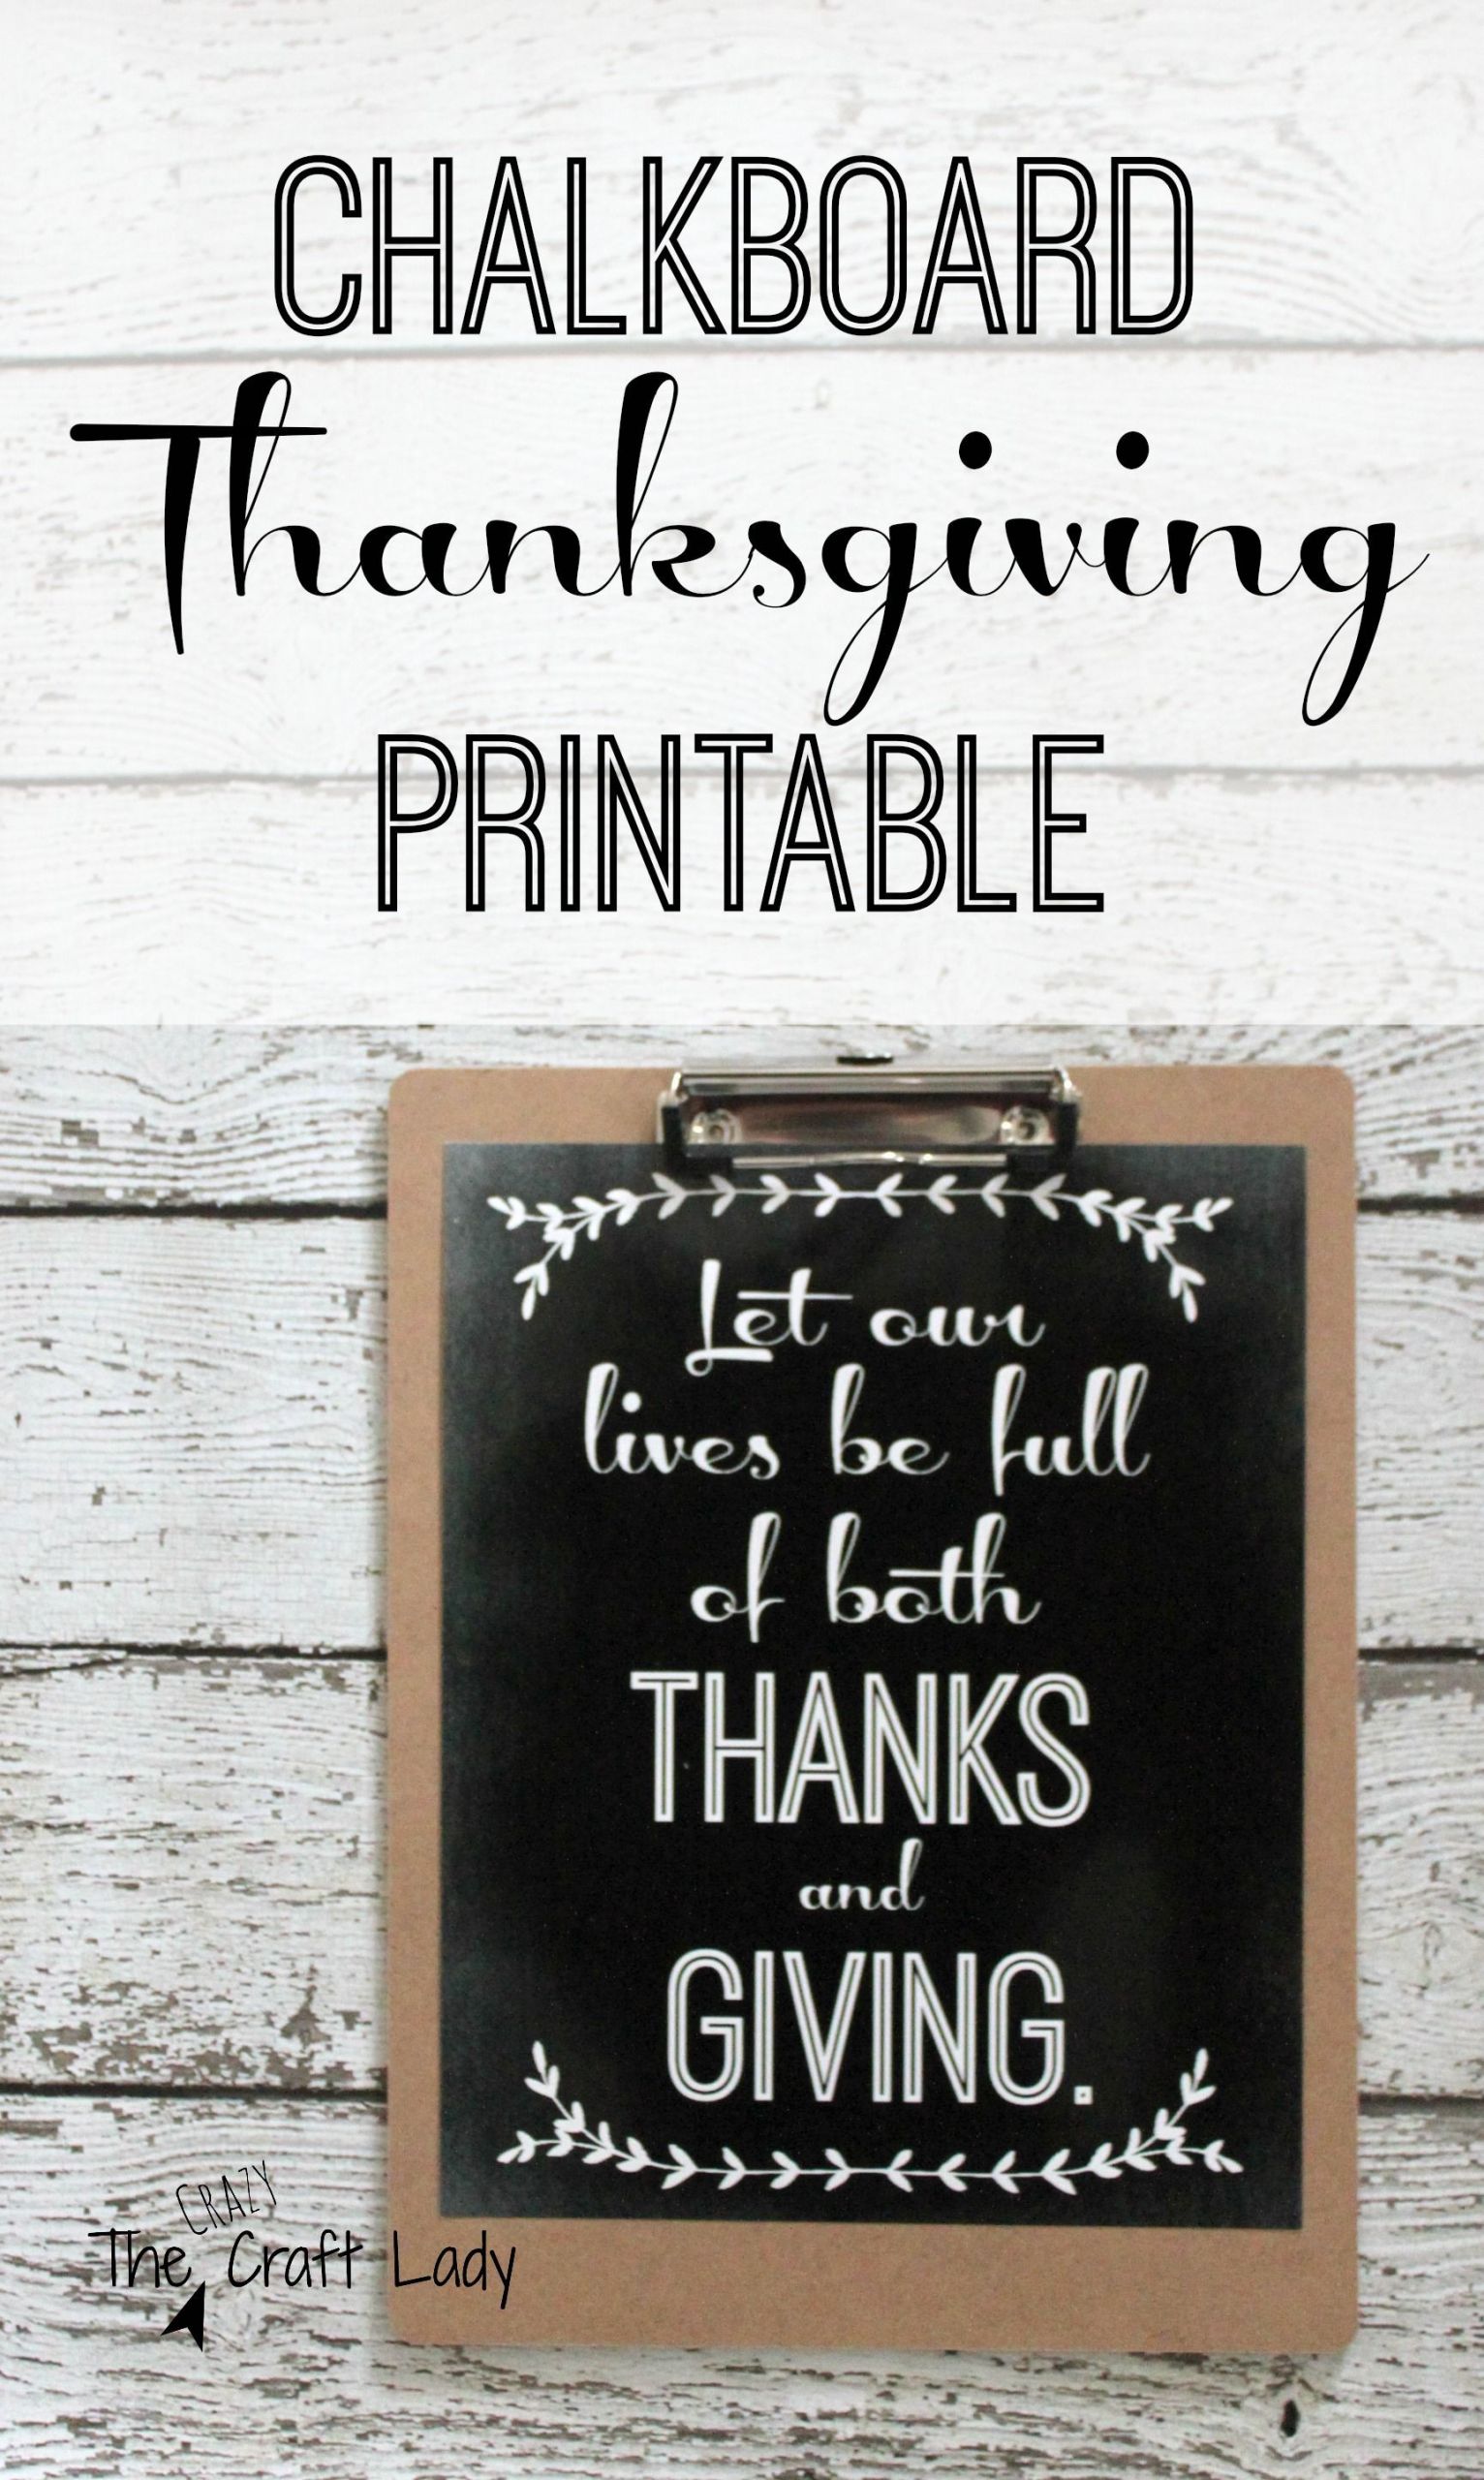 Thanksgiving Quotes Chalkboard
 Best 25 Chalkboard thanksgiving quotes ideas on Pinterest